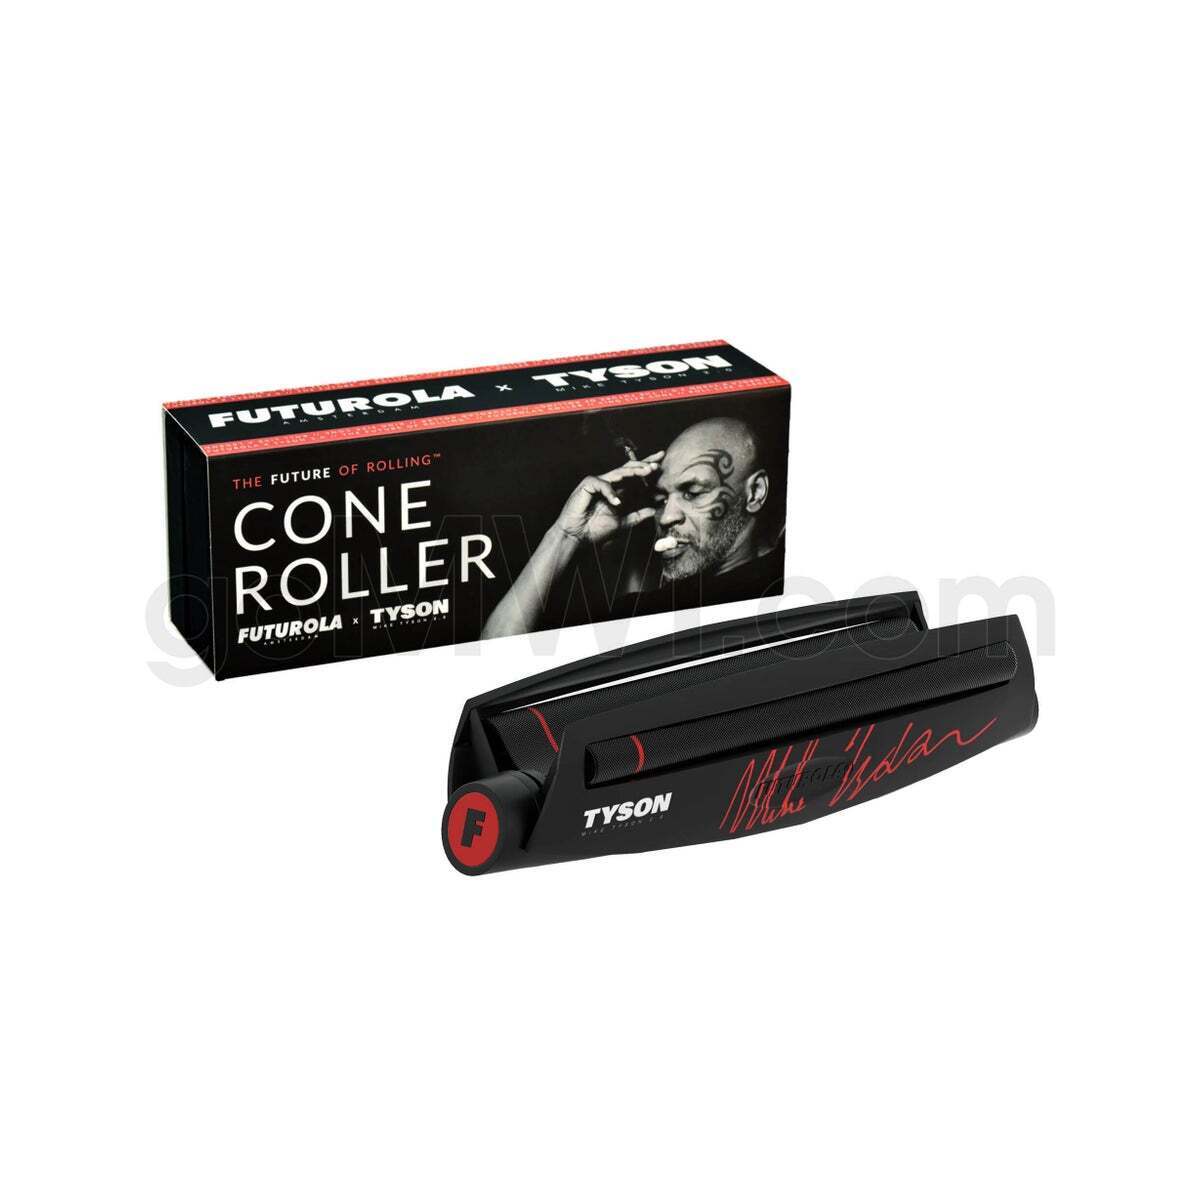 Tyson Ranch Futurola Cone Roller King Size The Future of Rolling - 1 Box